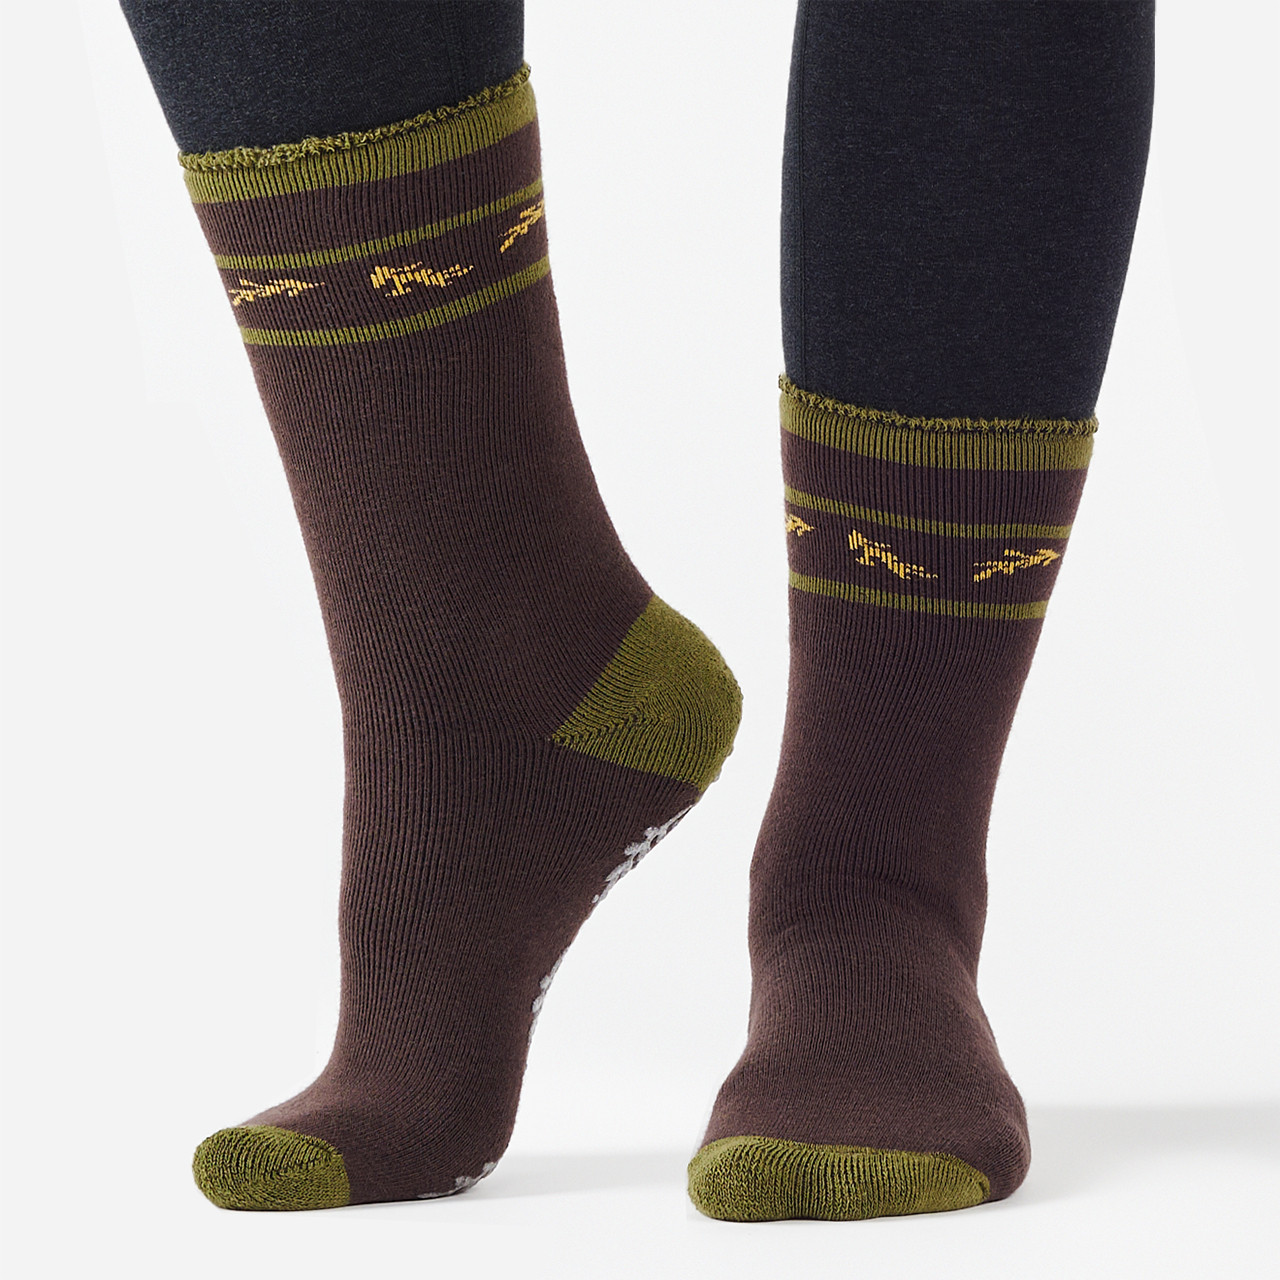  Ontel Huggle Slipper Socks, Grey, One Size : Clothing